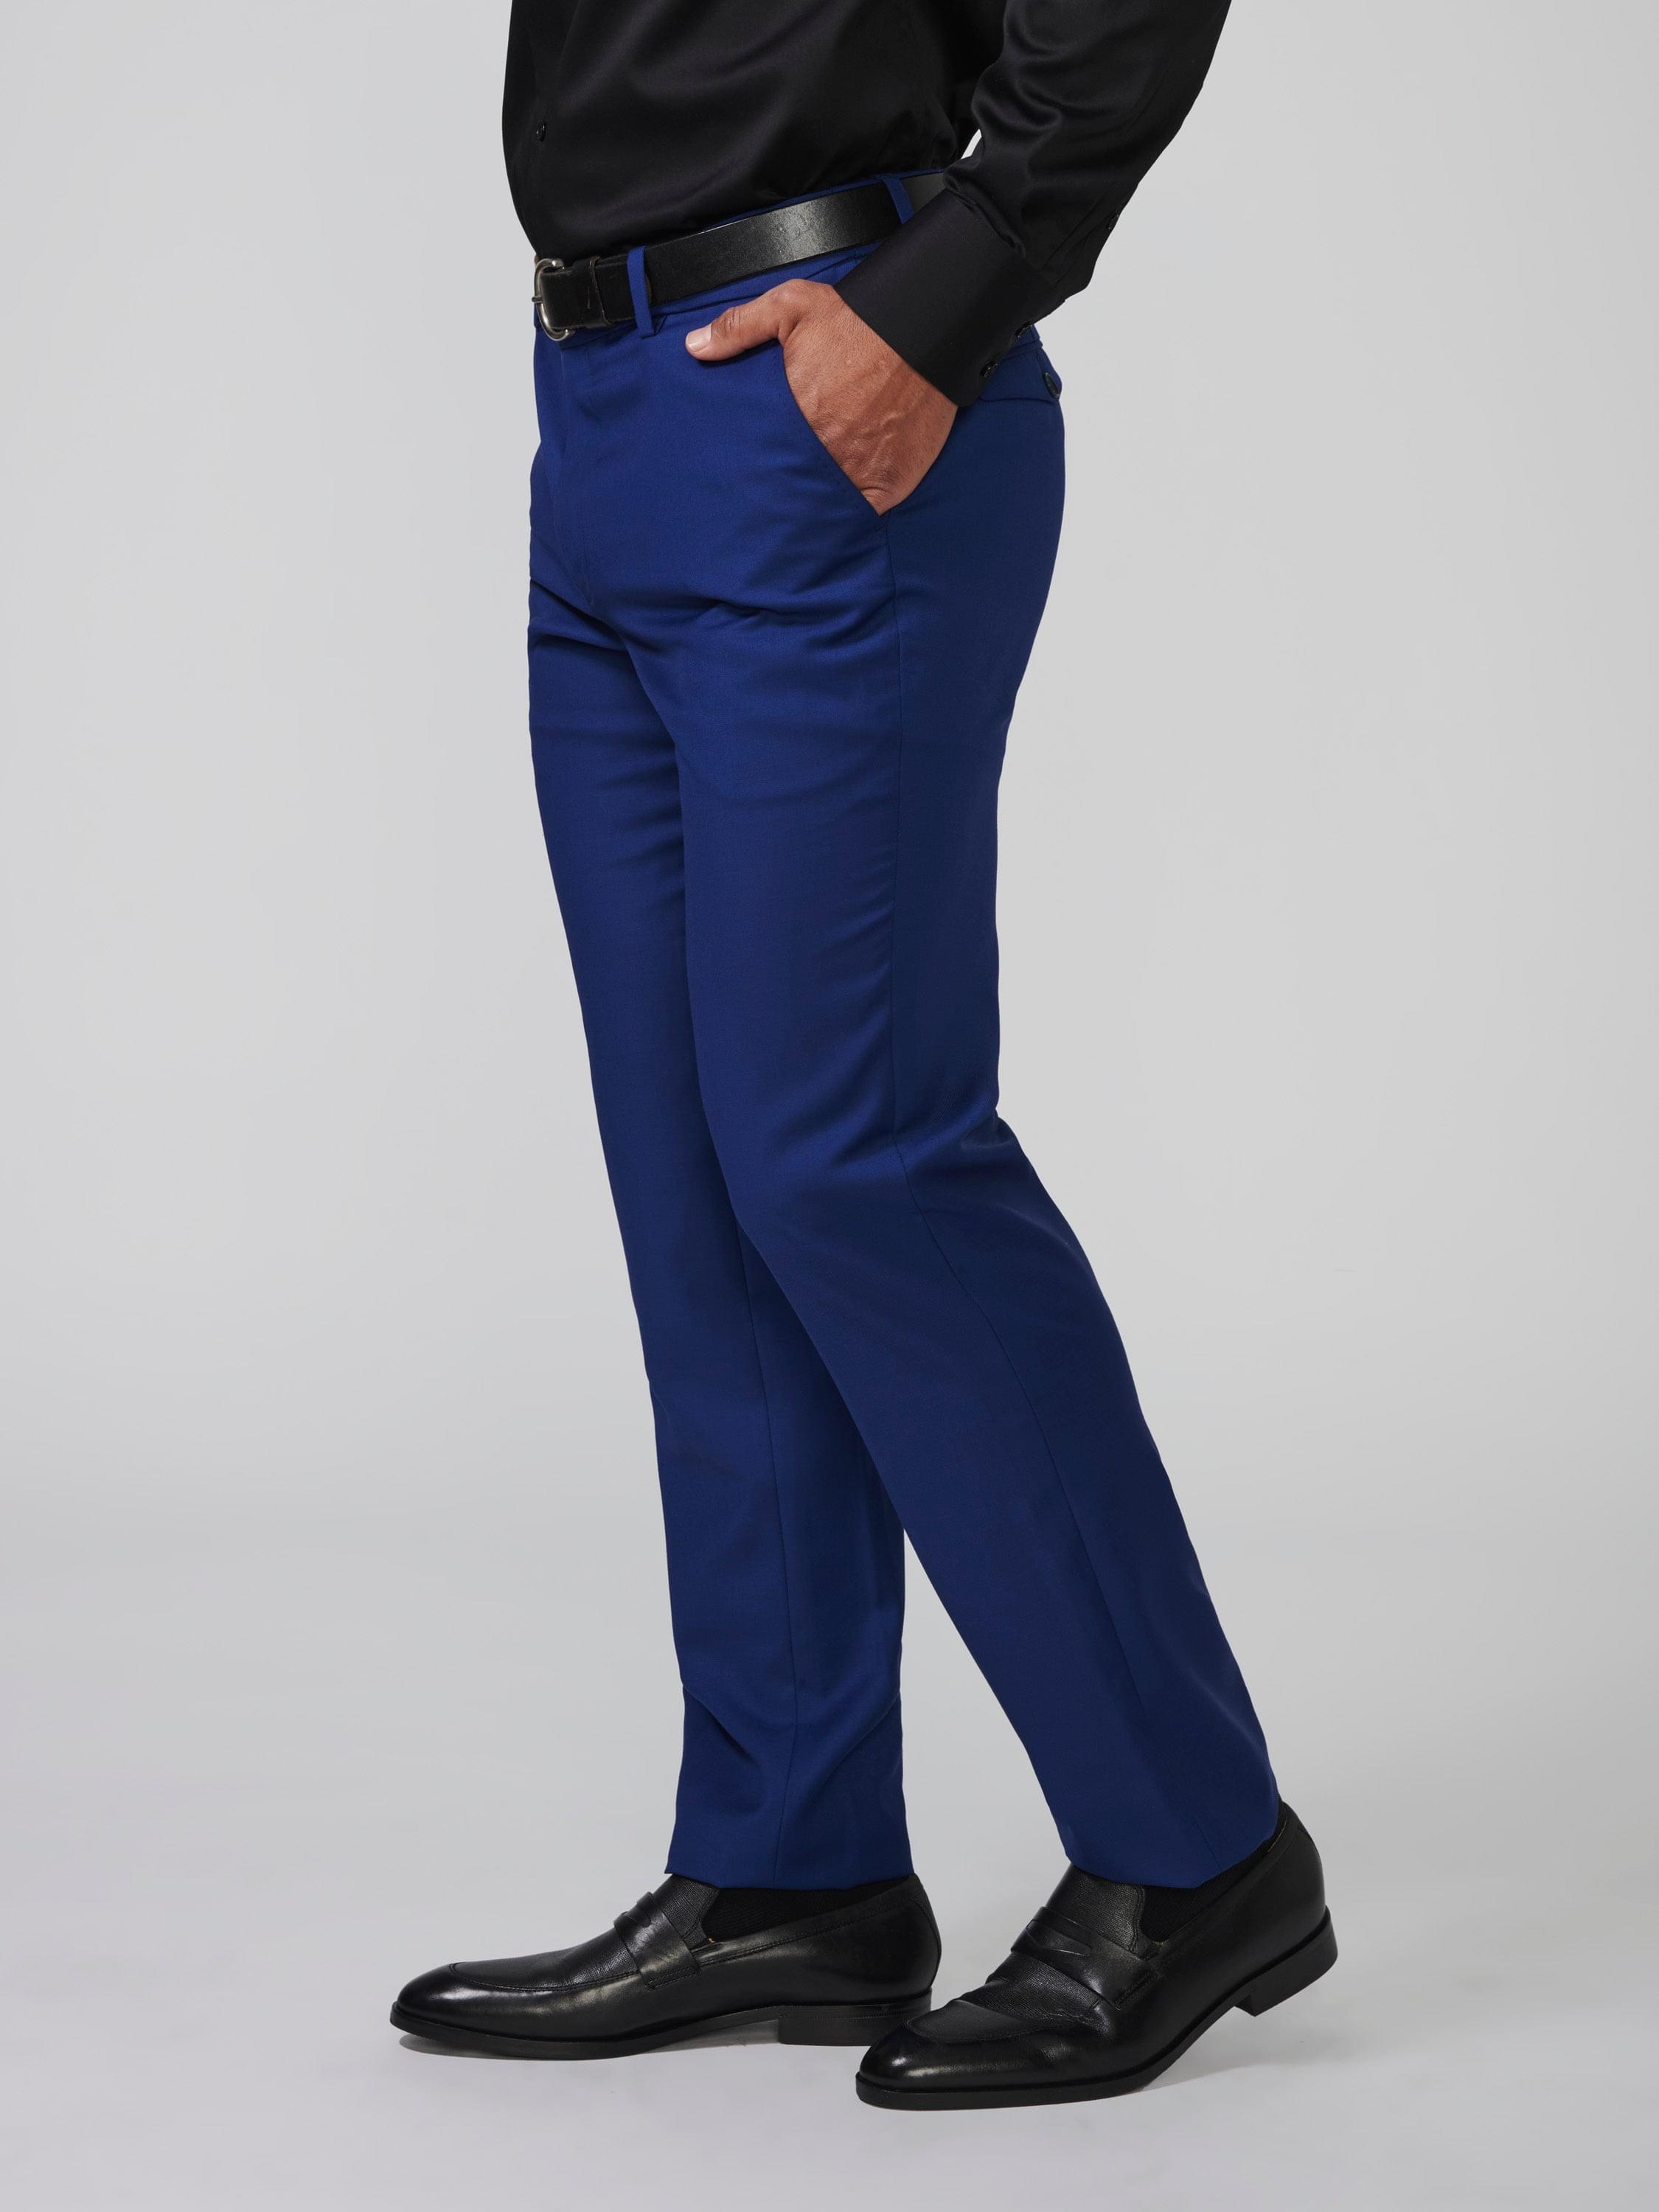 Decible Polyster Blend Formal Trousers For Man |formal pants blue | pant  trousers for men office Symbol Men Dress Pants Men's Smart FIT Dark Blue